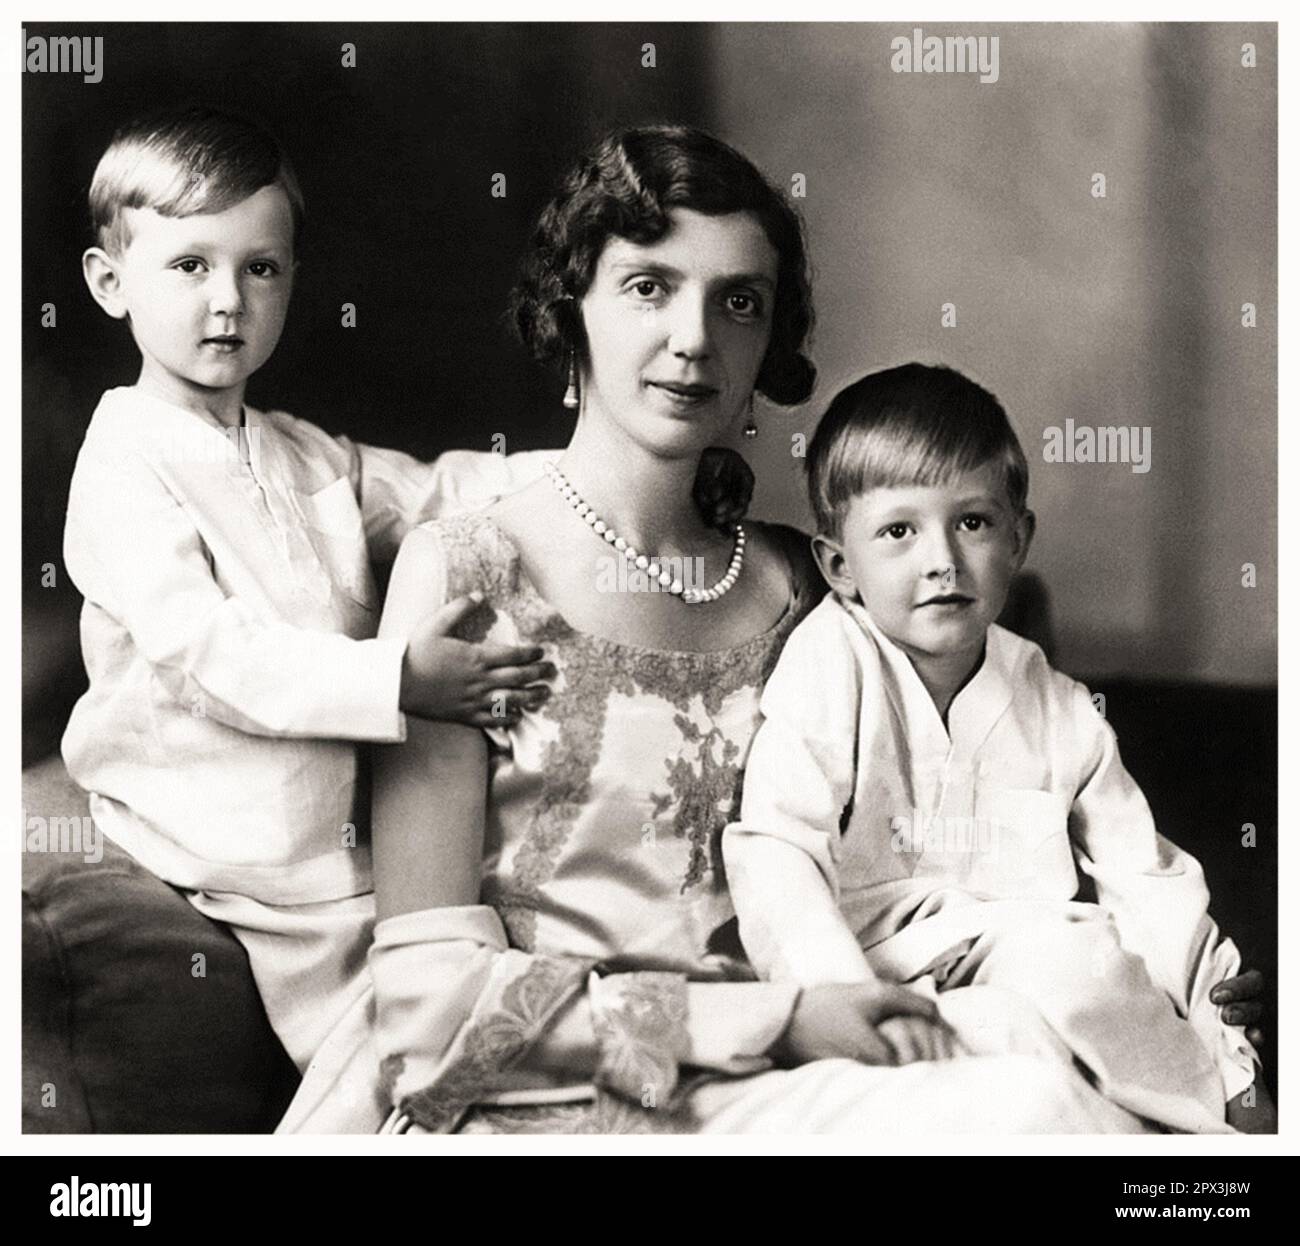 1932 c., Rome , ITALIE : la princesse italienne MAFALDA di SAVOIA ( 1902 - 1944 ), mariée au prince allemand Filippo d'Assia Kassel ( Philipp de HESSE ), sur cette photo avec des fils : MORITZ ( Maurizio , 1926 - 2013 ) et HENRICH ( Enrico , 1927 - 1999 ). Mafalda était la fille du roi d'Italie VITTORIO EMANUELE III et de la reine ELENA ( Helene del Montenegro ). Photo d'EVA BARRETT ( 1879 - 1950 ). - SAVOY - principessa - ITALIA - personalità celebità DA BAMBINI - da piccolo da piccoli piccola - bambino - ENFANT - ENFANCE - FANTAZIA - PERSONNALITÉ CÉLÉBRITÉ - personnalités célébrités quand était CHI Banque D'Images